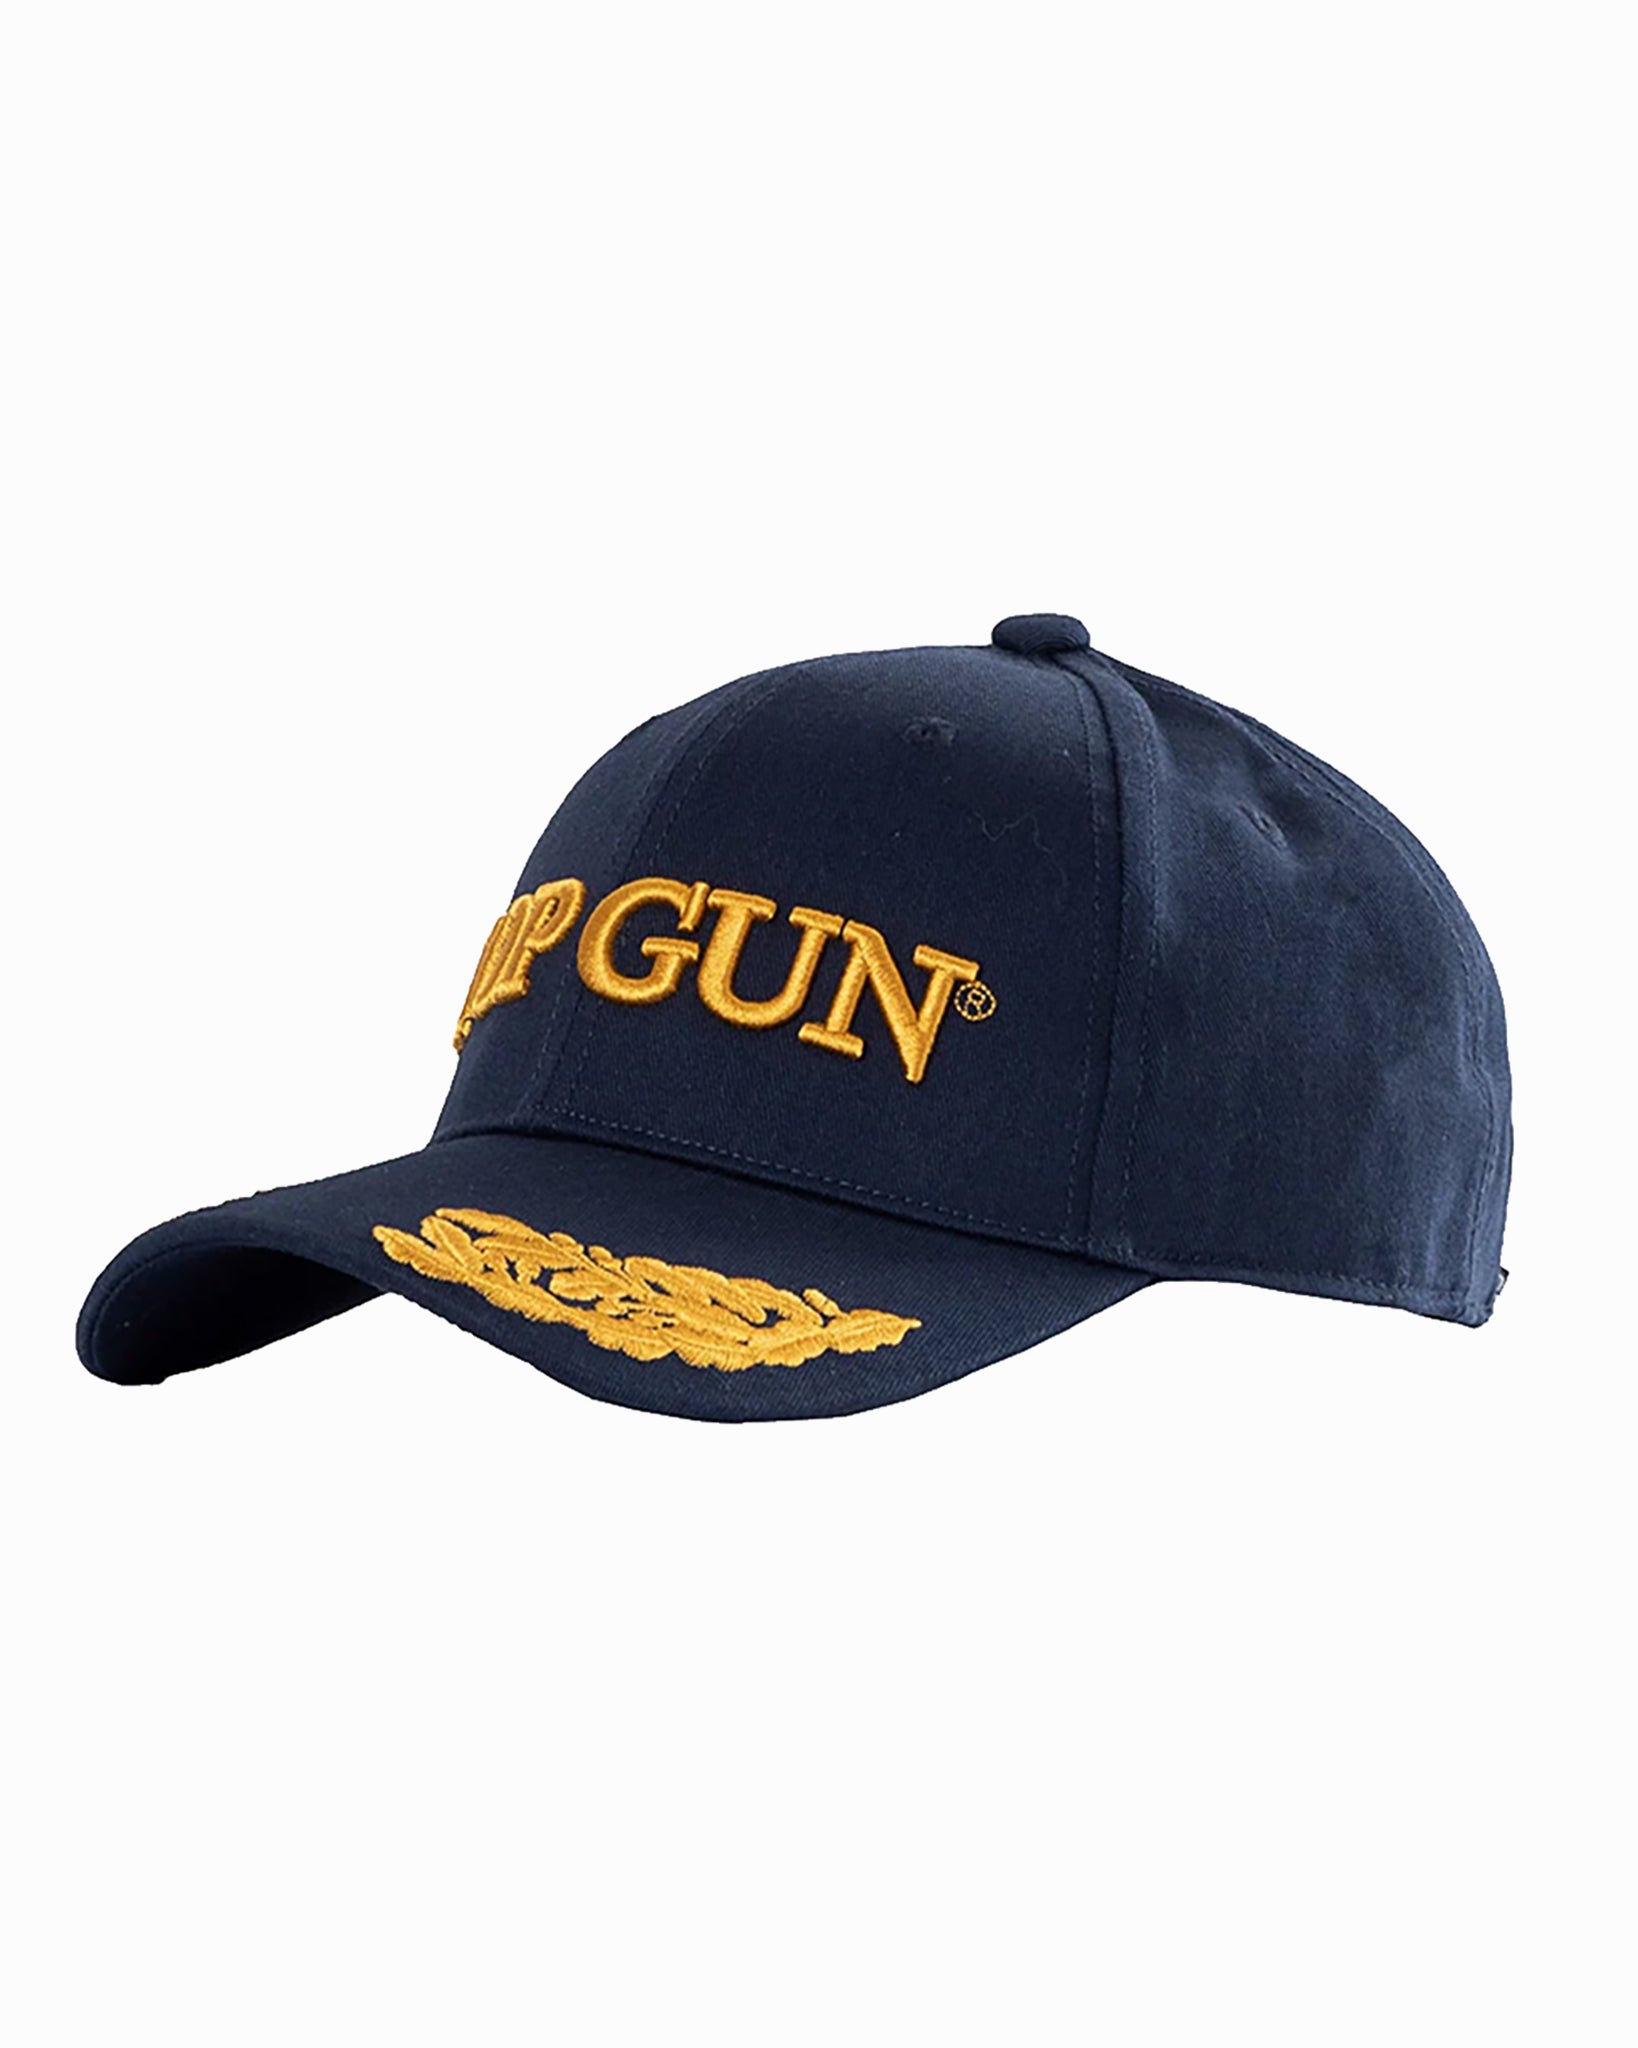 Cap, Beanie, Store and Hat, | Gun: Trucker Top Official Store | Caps More Maverick Gun Top –